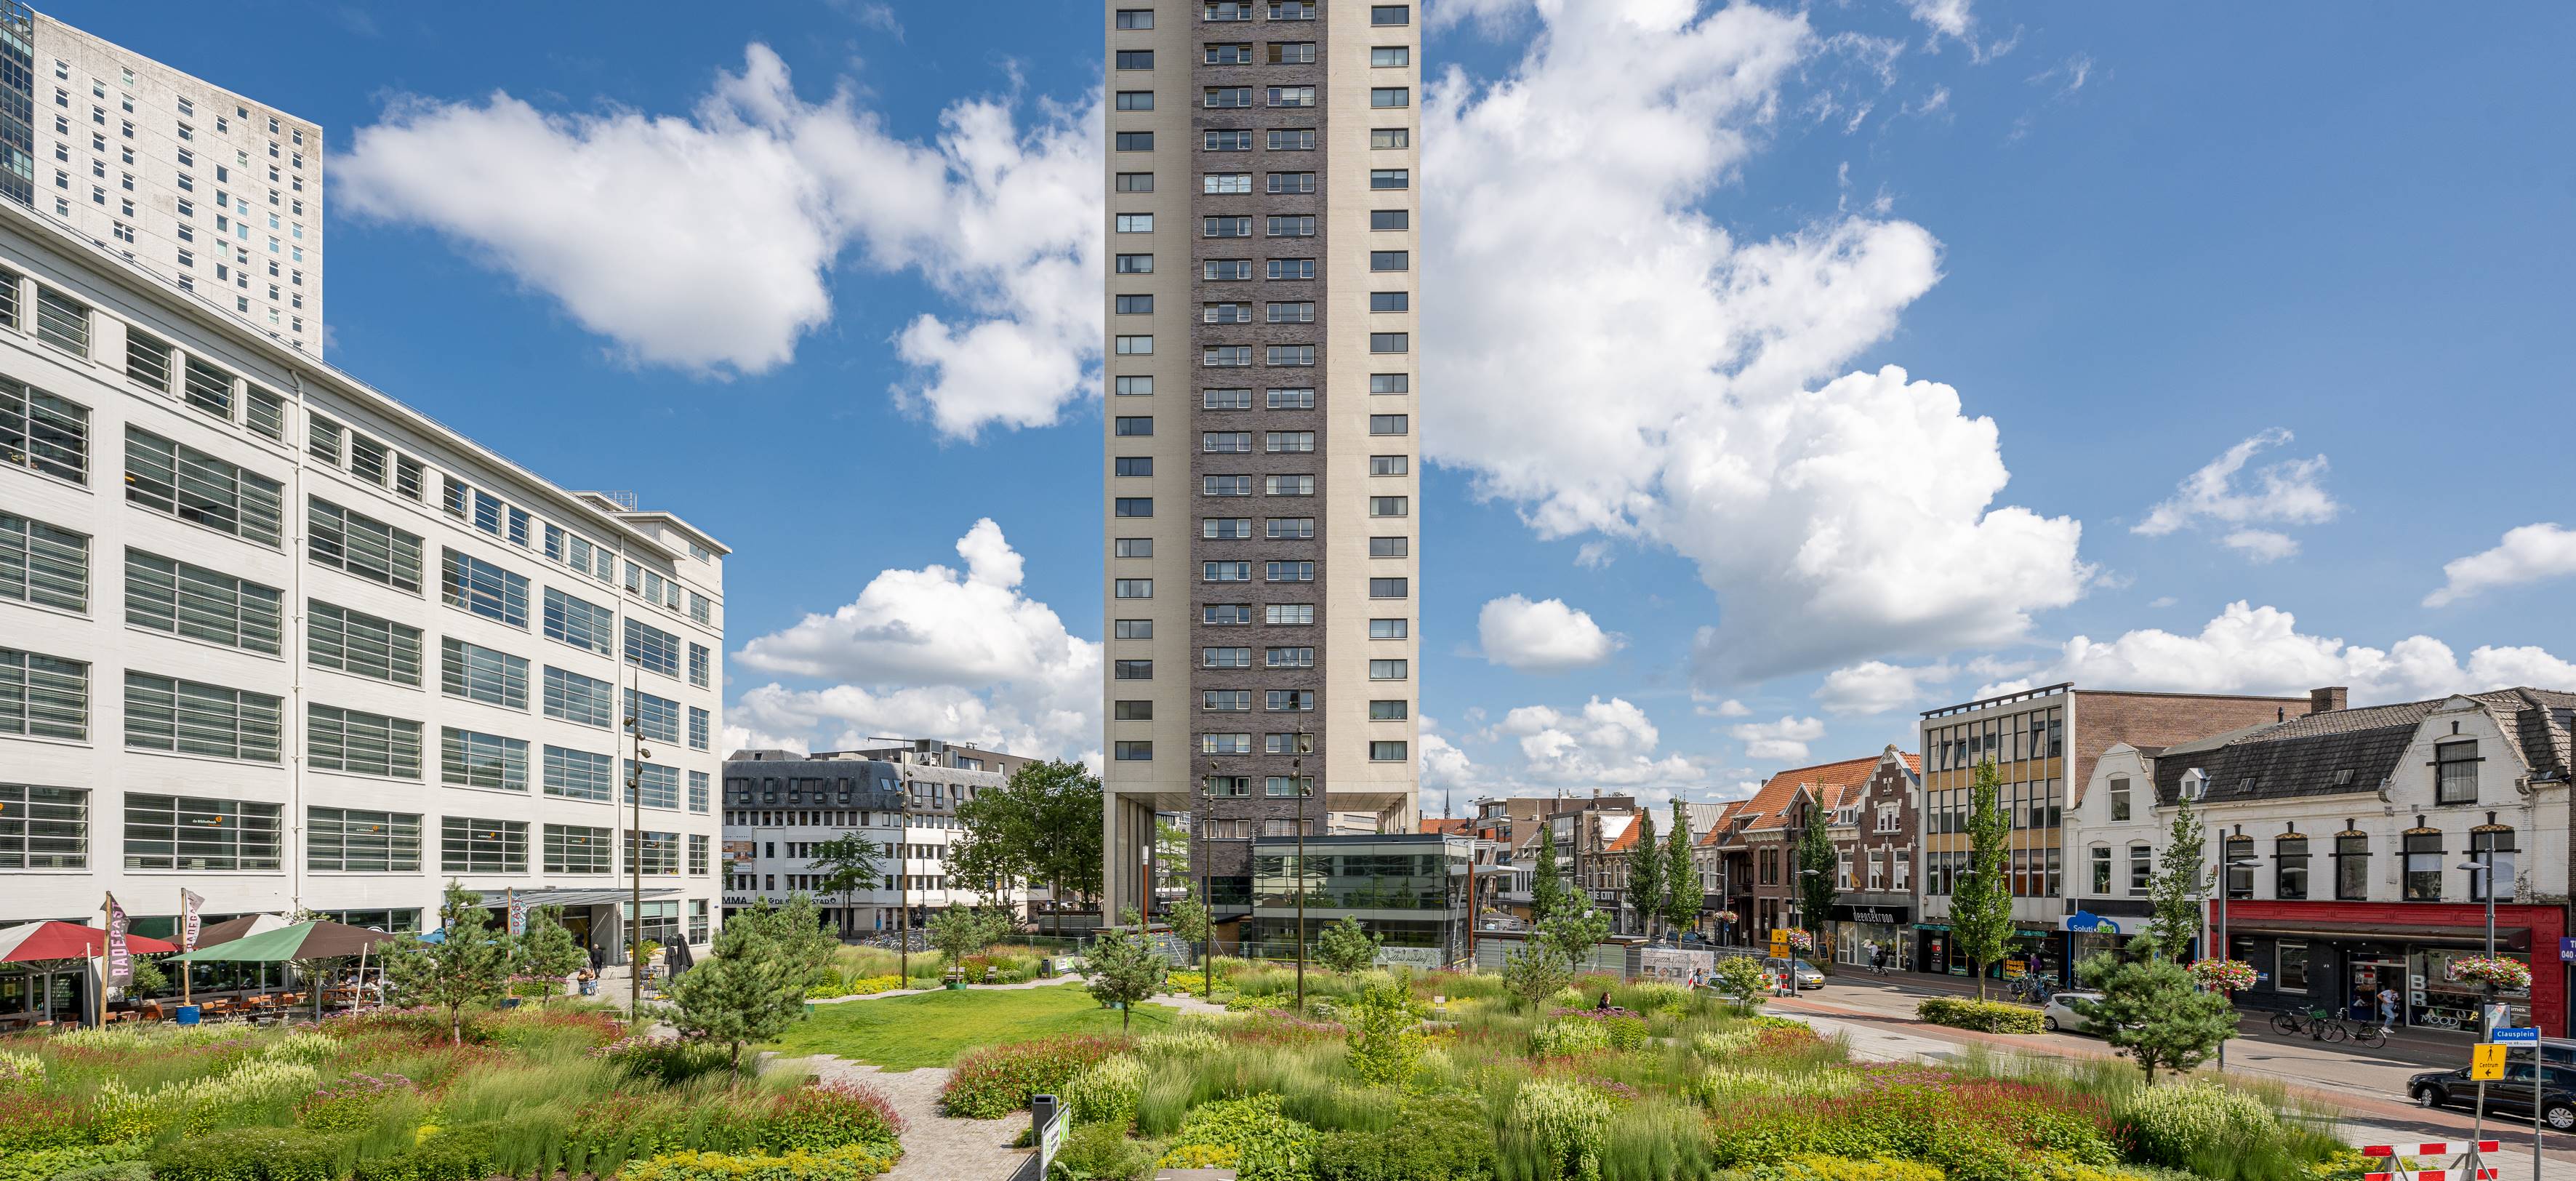 Clausplein, Eindhoven - Openbare ruimte